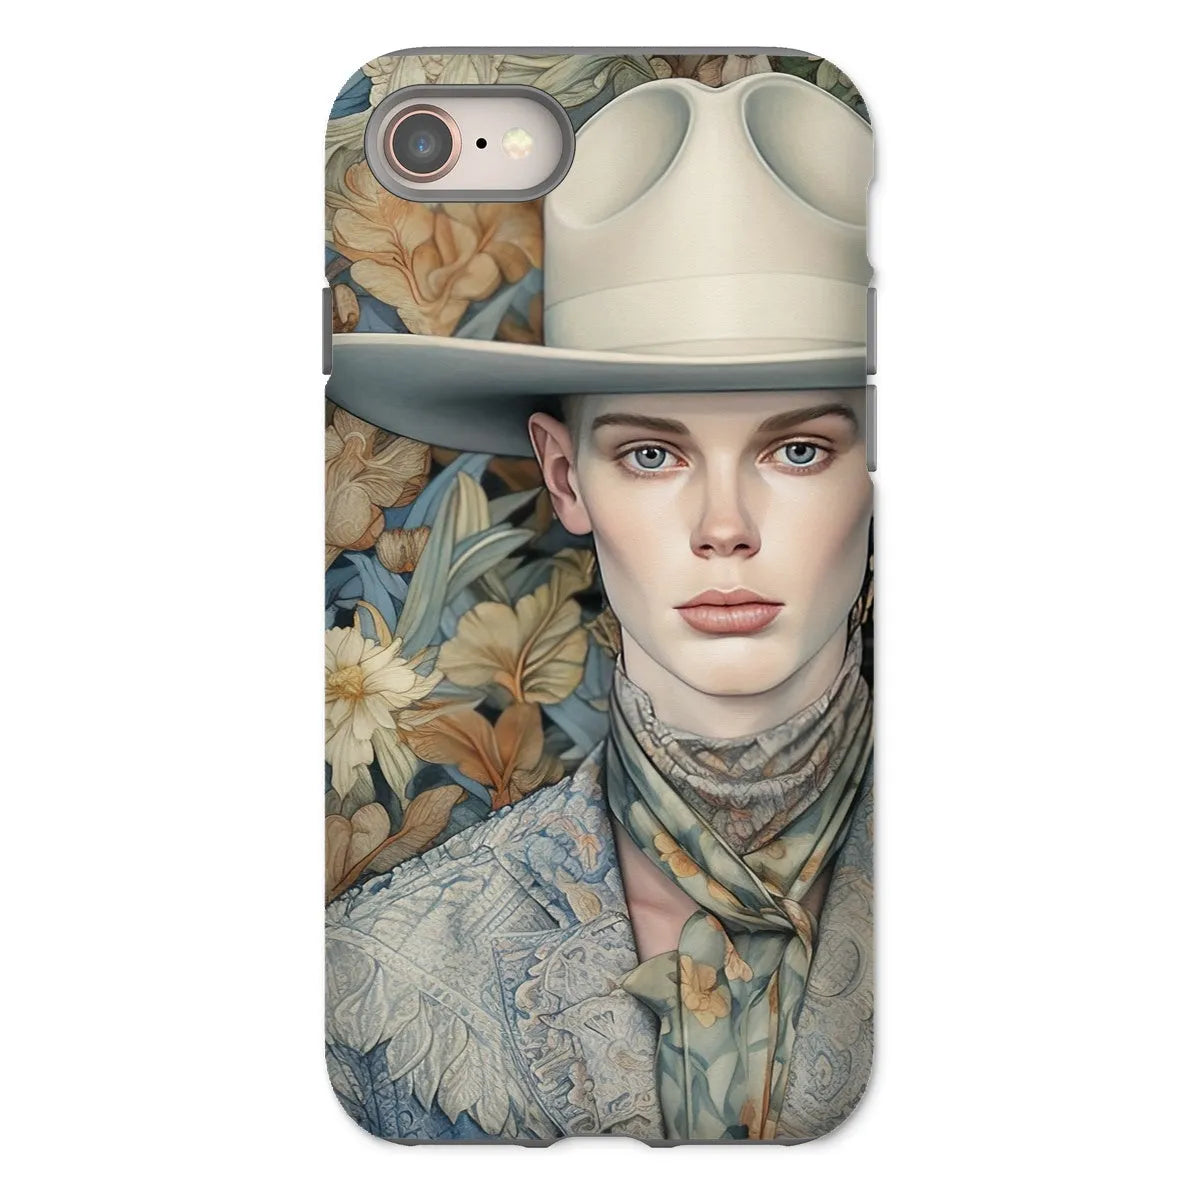 Jasper - Dandy Twink Cowboy Aesthetic Art Phone Case - Iphone 8 / Matte - Mobile Phone Cases - Aesthetic Art